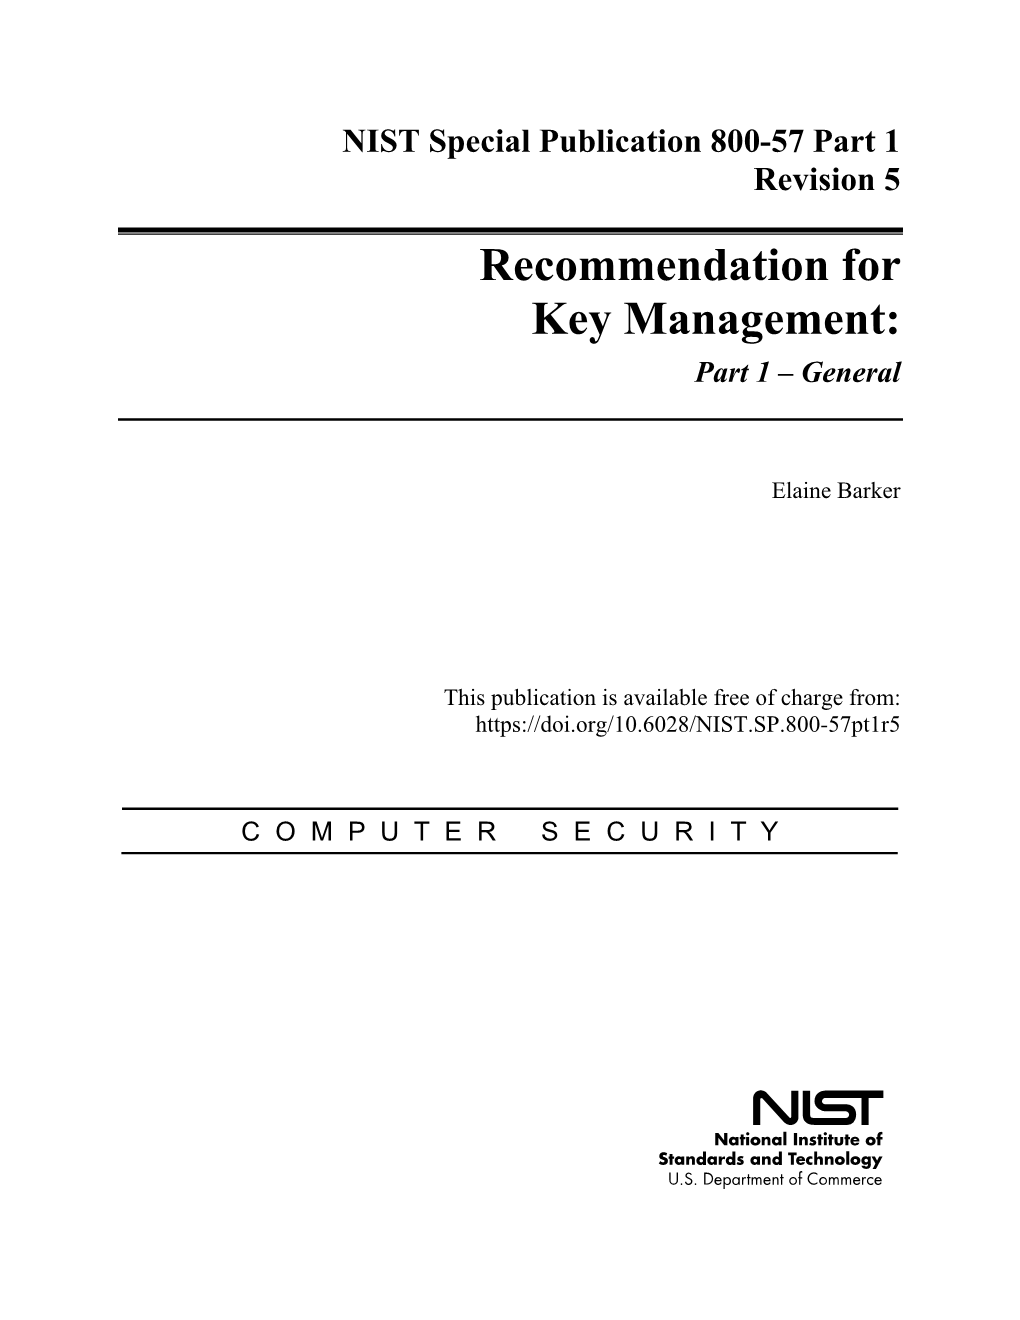 Recommendation for Key Management: Part 1 – General